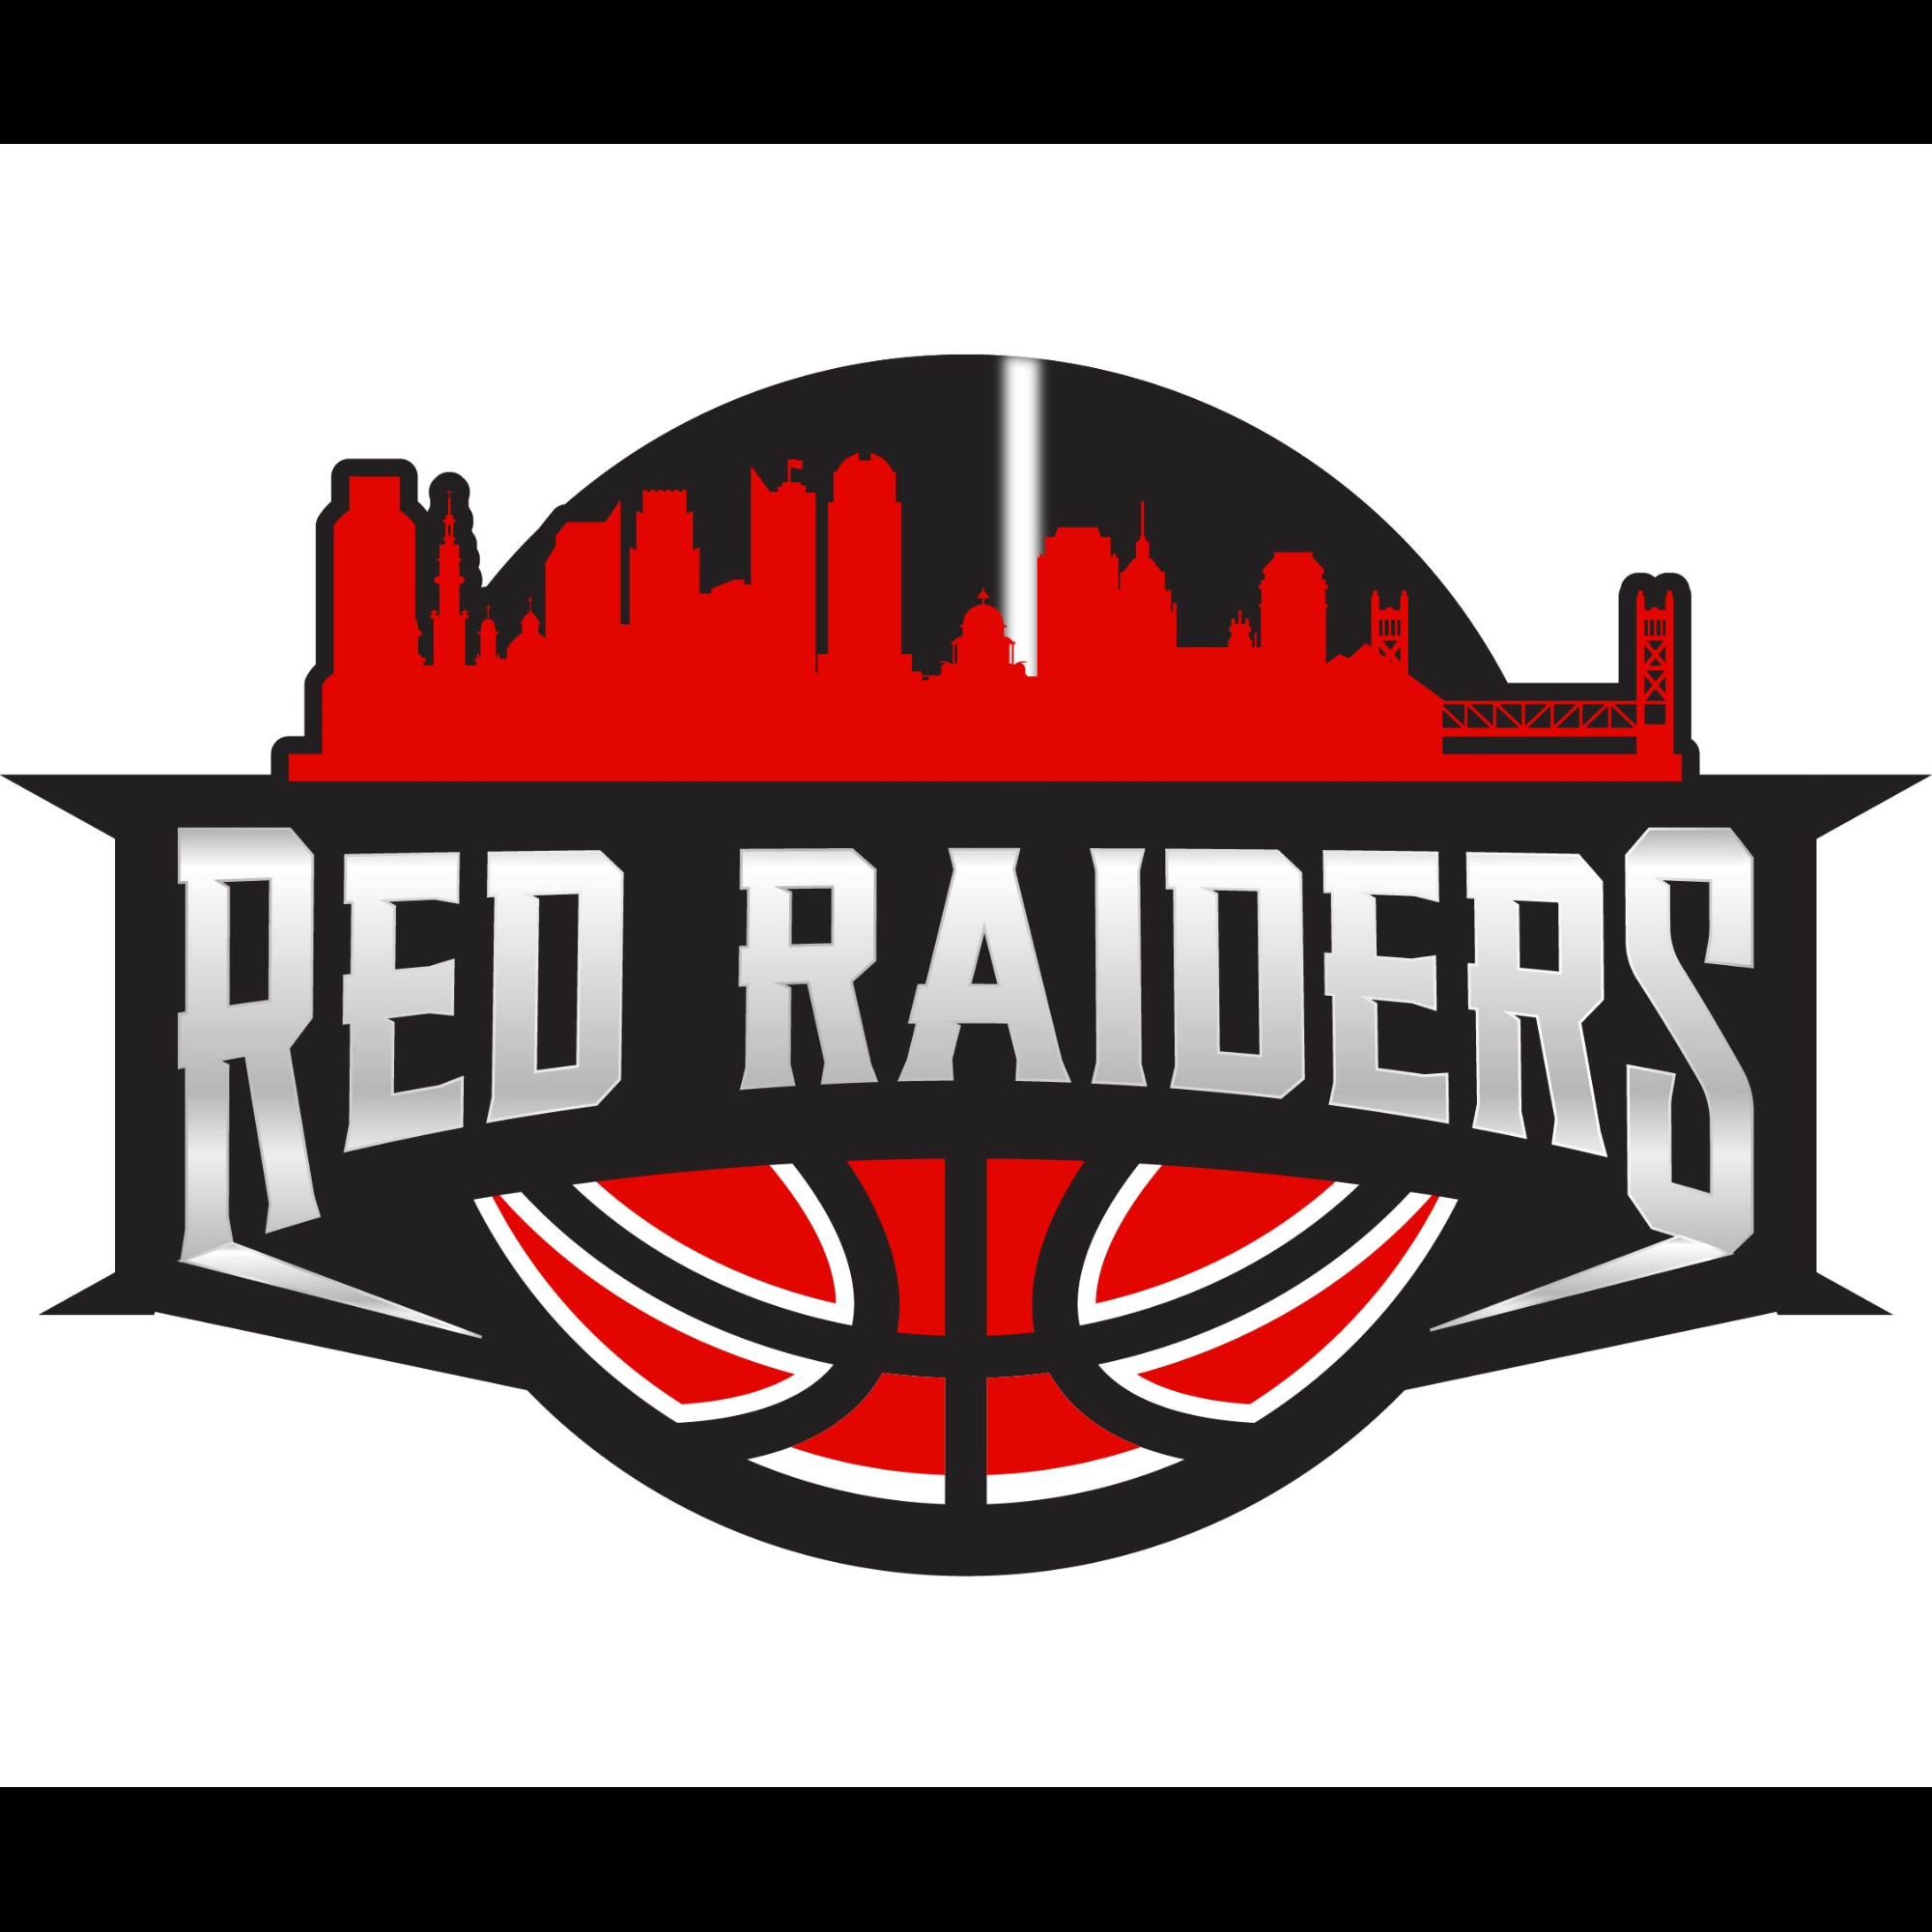 The official logo of Sacramento Red Raiders